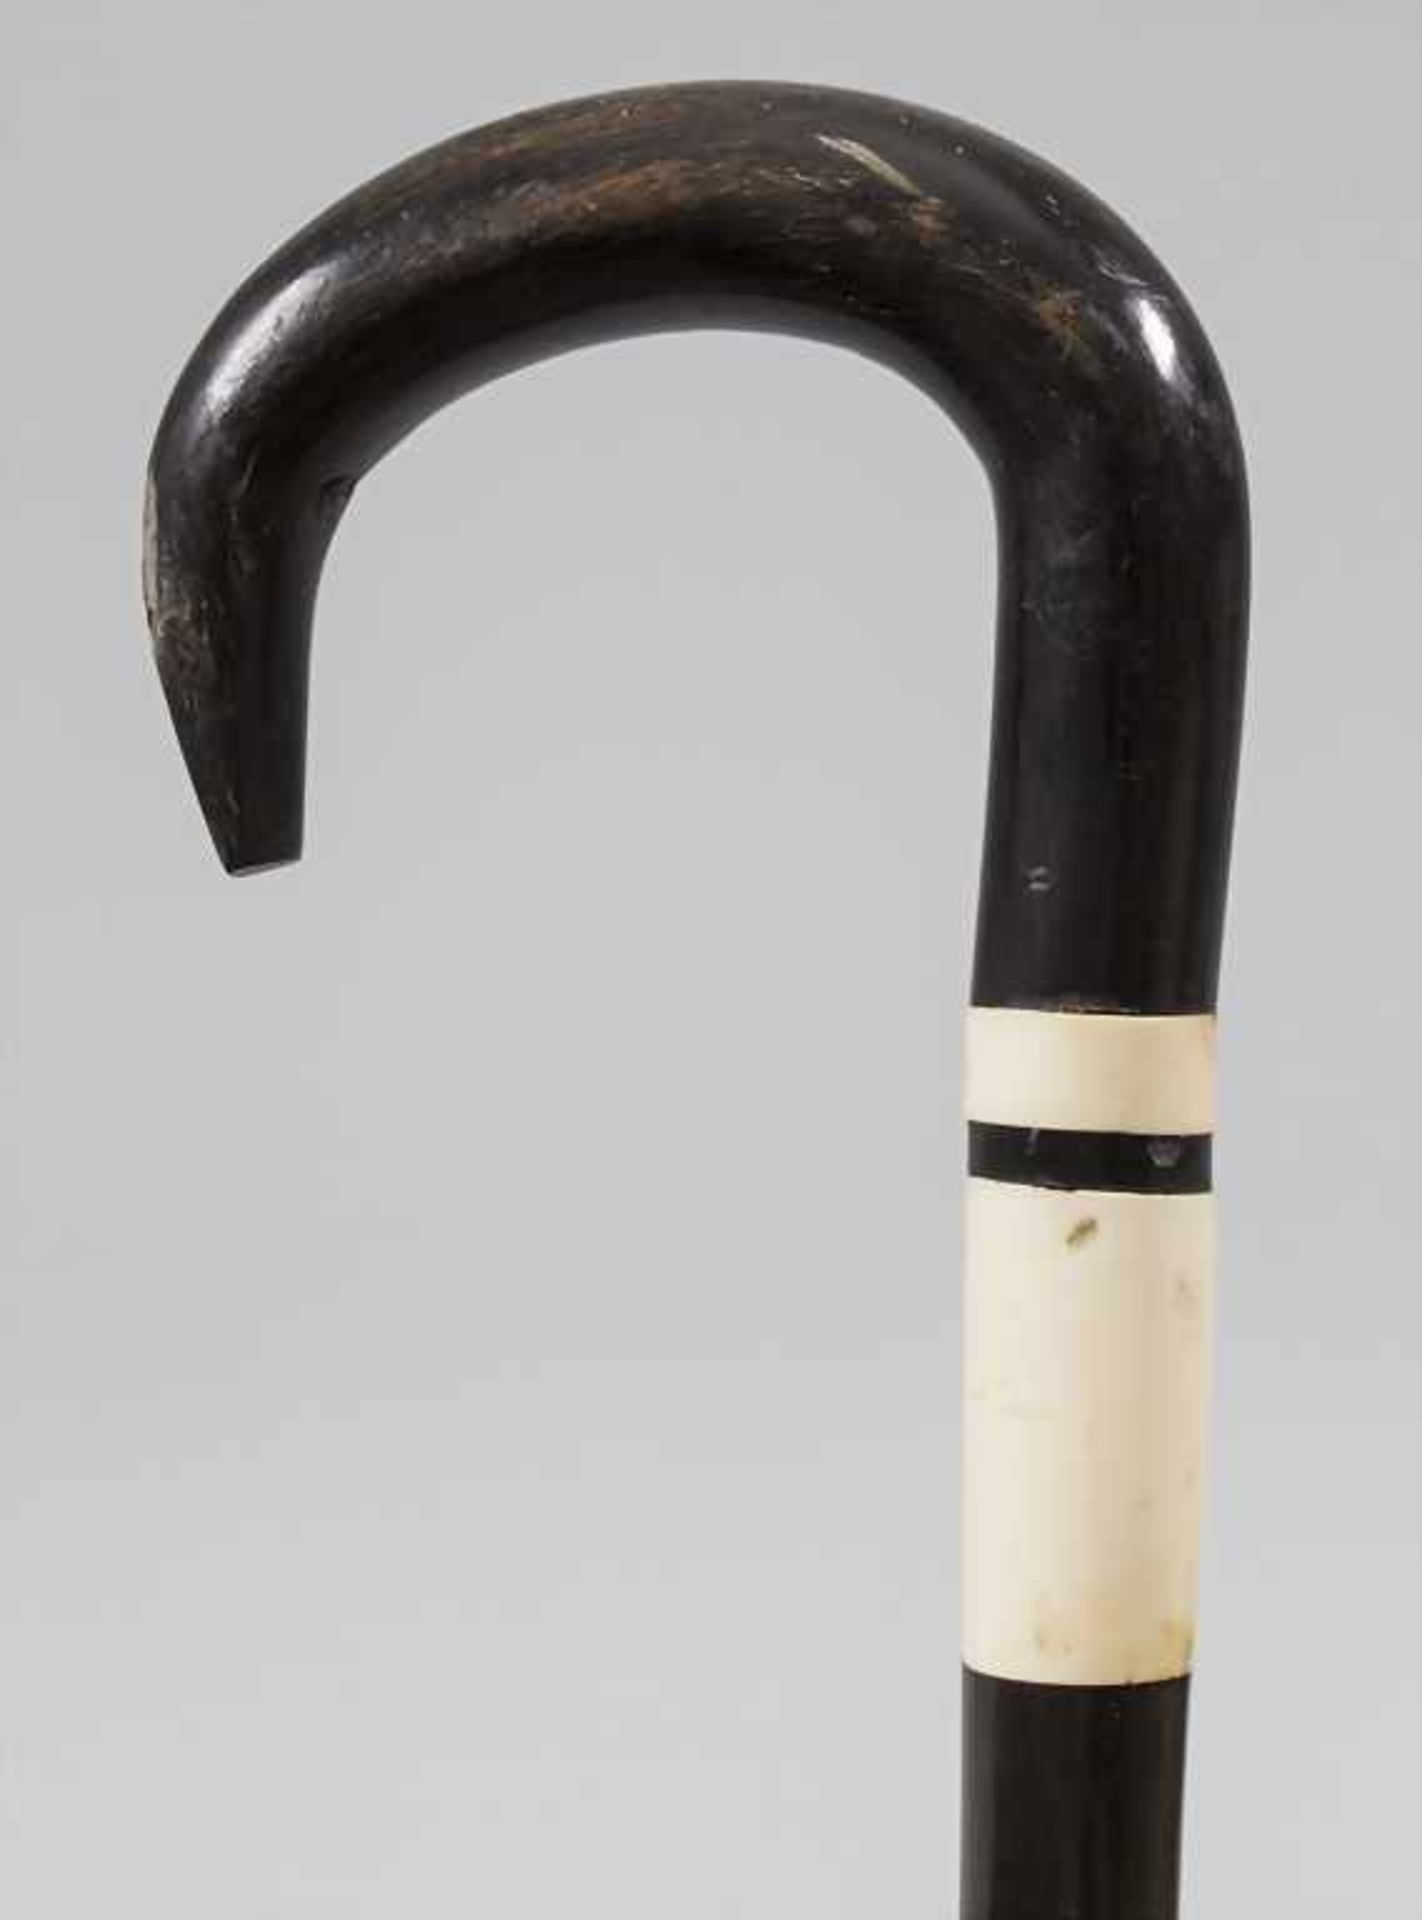 Spazierstock / A walking stick / cane, um 1900